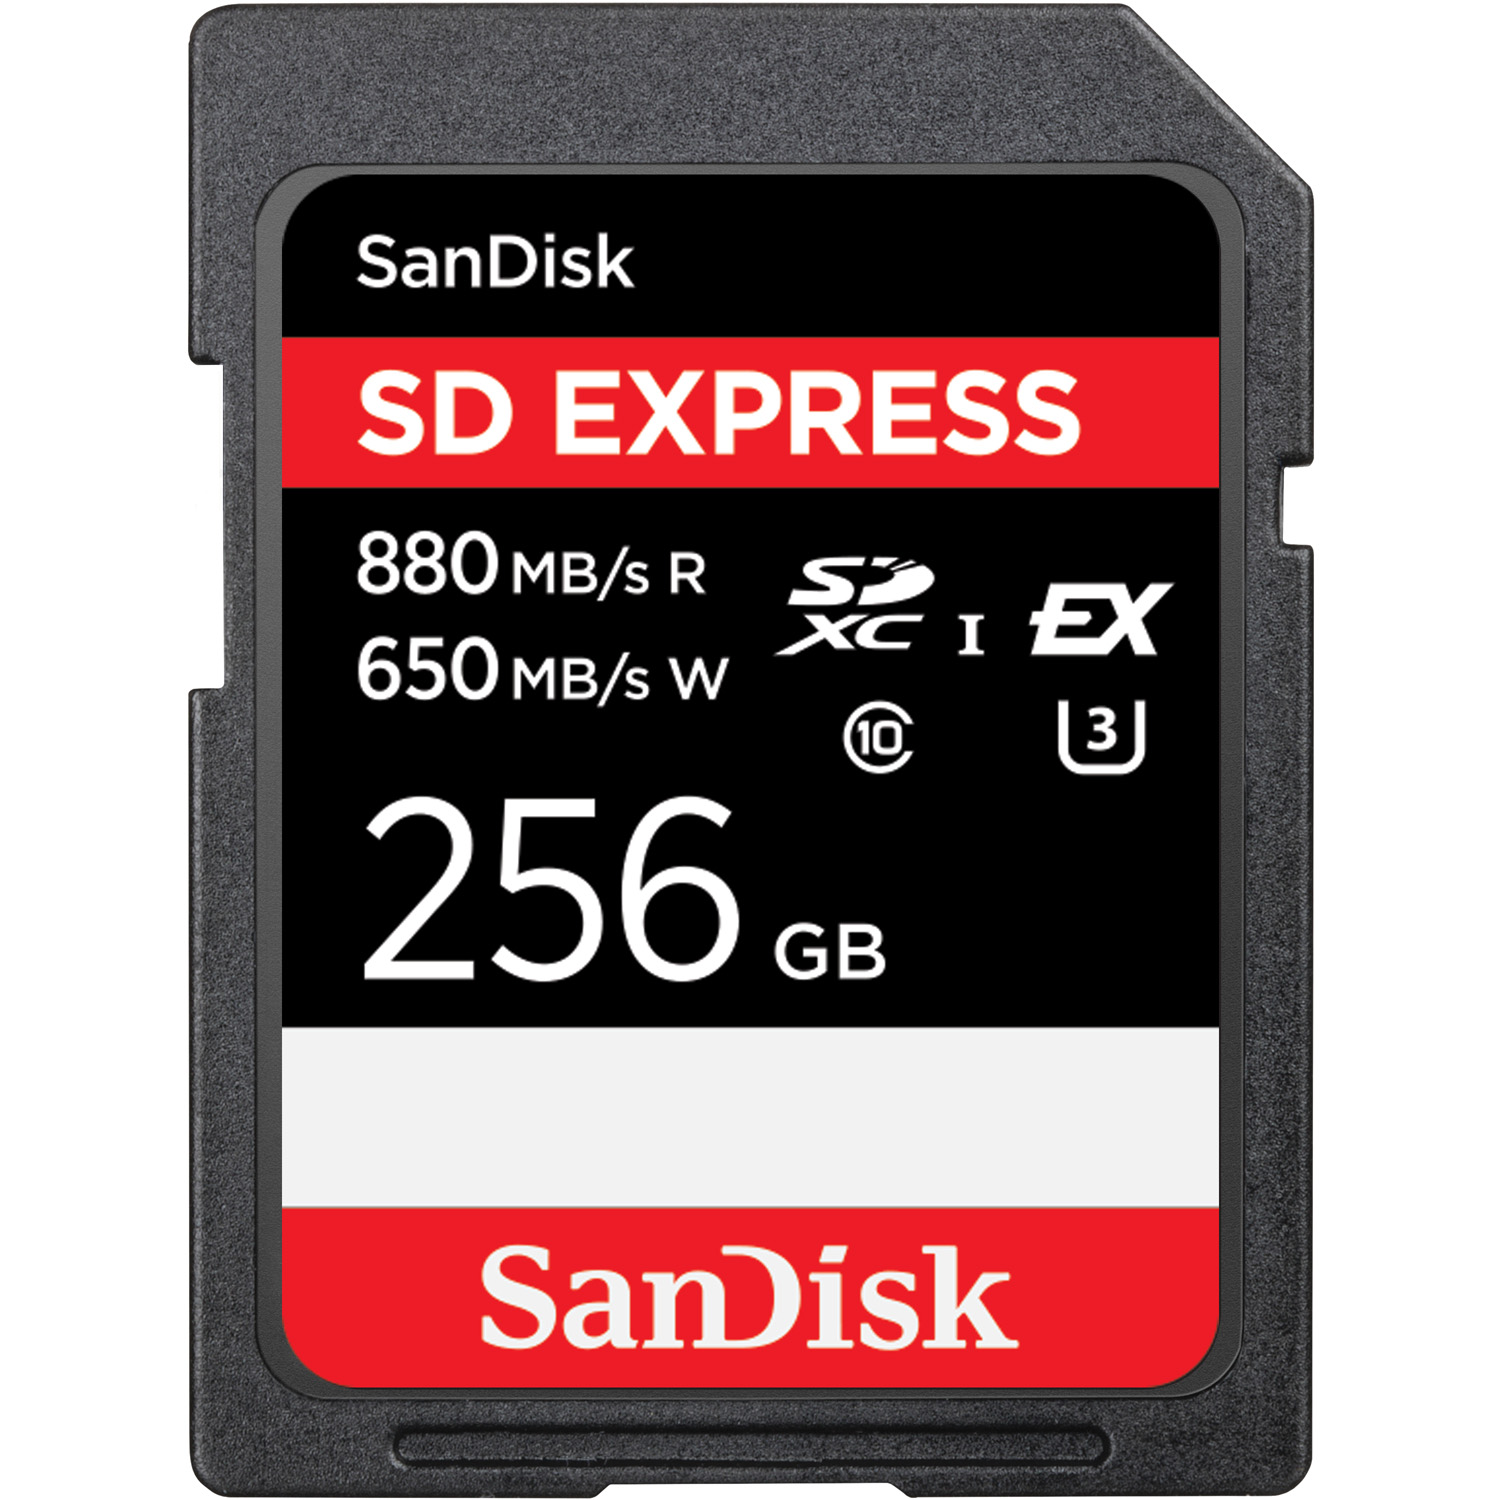 256GB SanDisk SD Express | Image © Western Digital